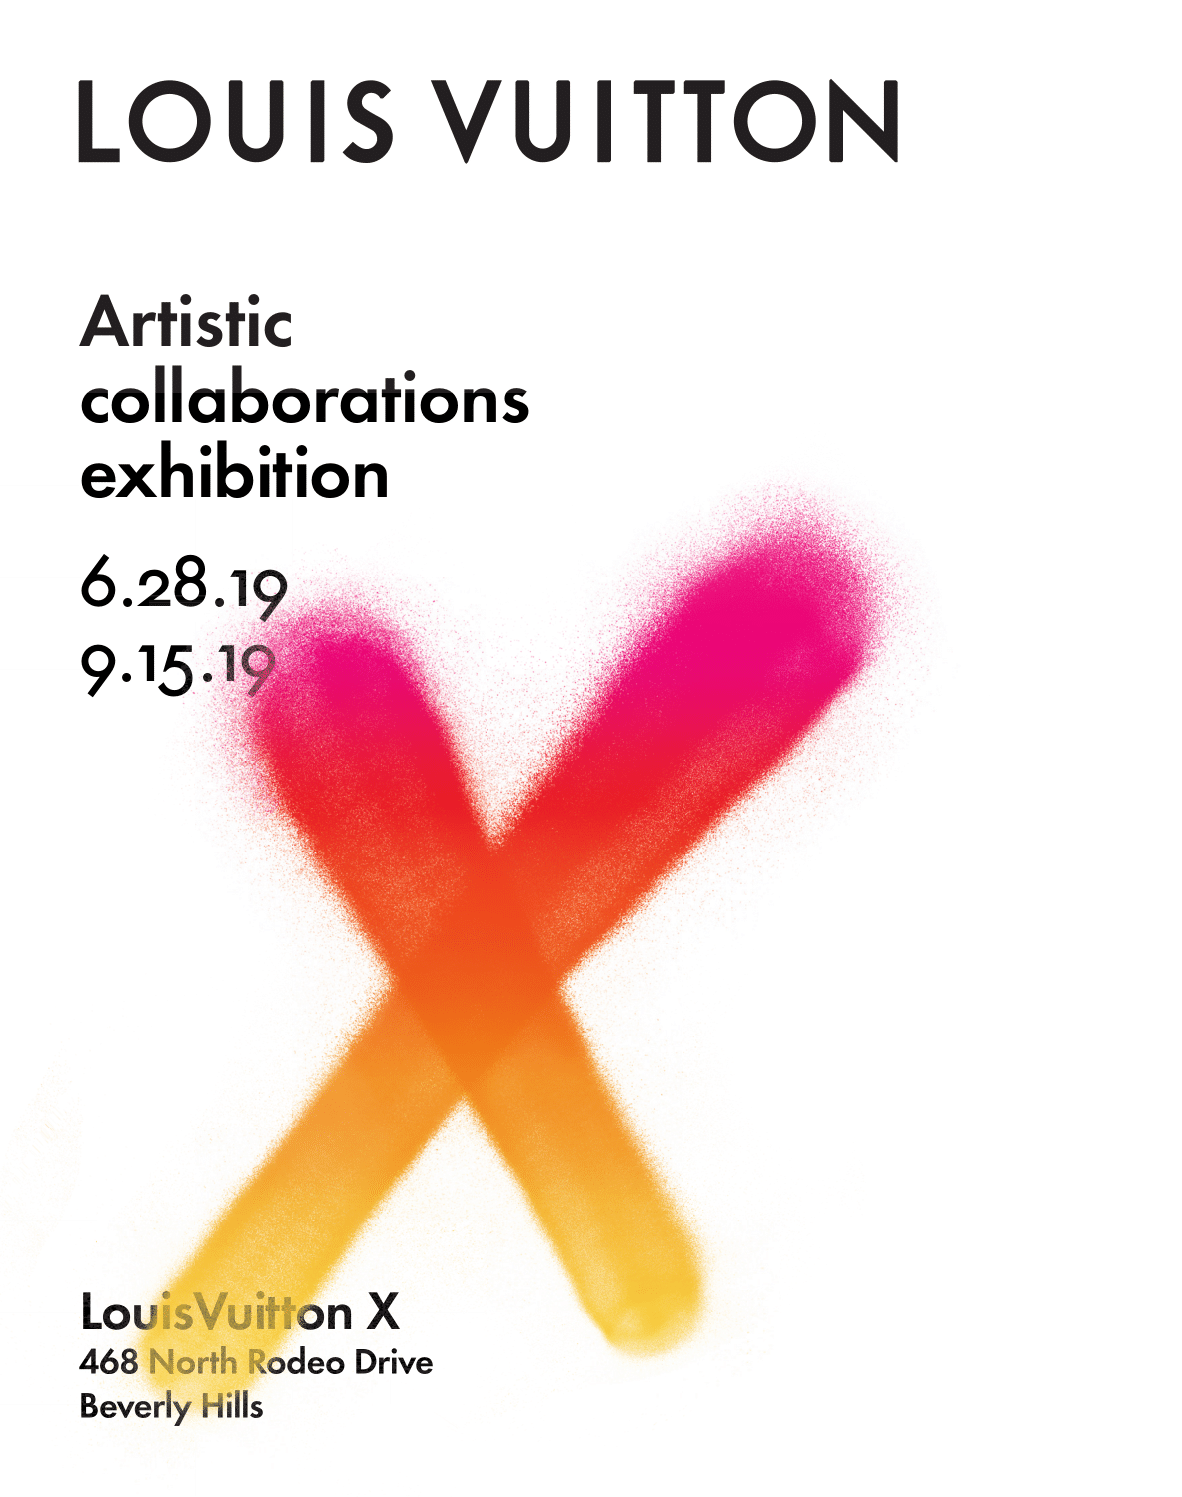 Louis Vuitton X Exhibition | Discover Los Angeles